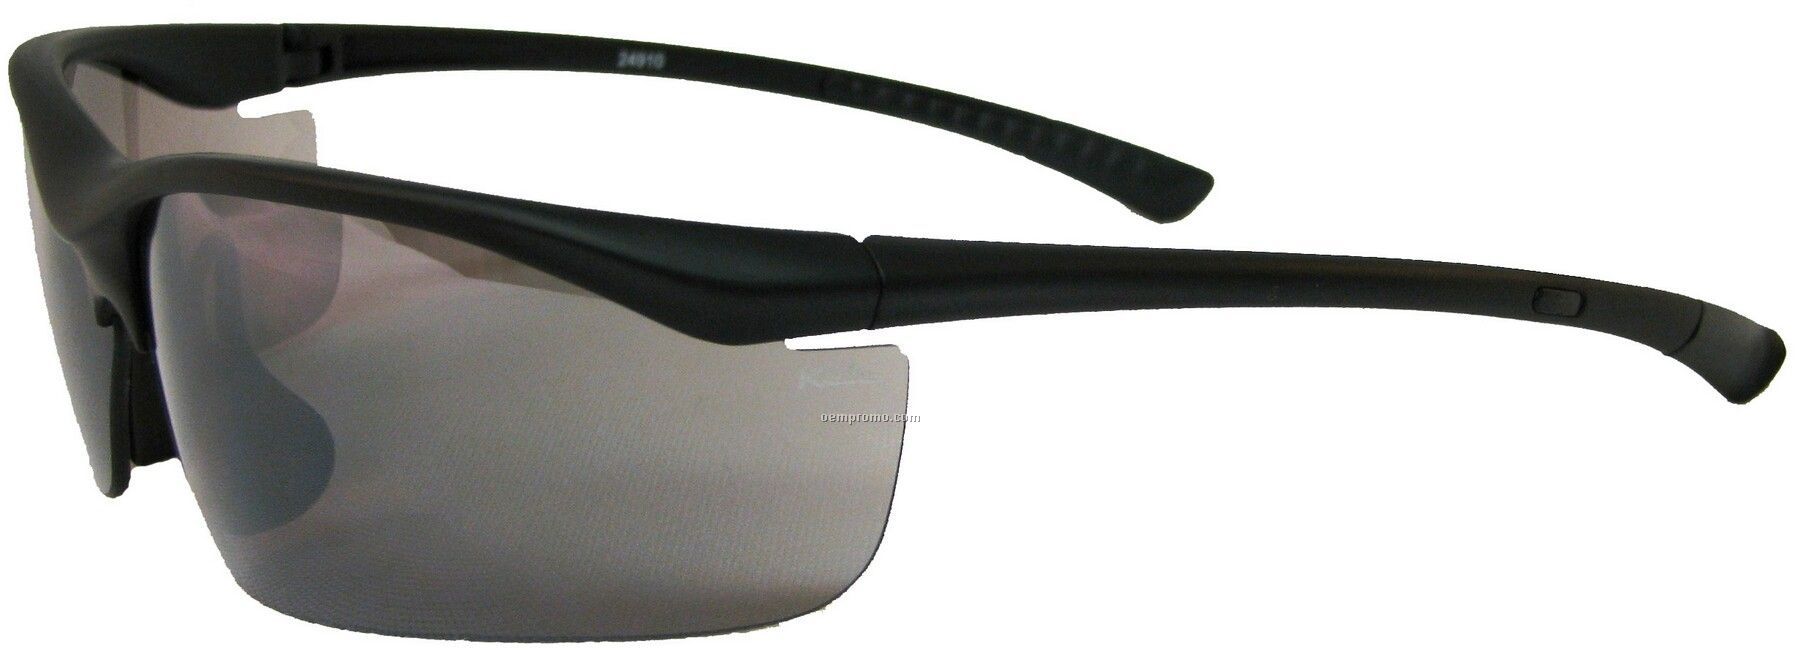 Torch Sunglasses - Gray Lens W/Matte Black Frame